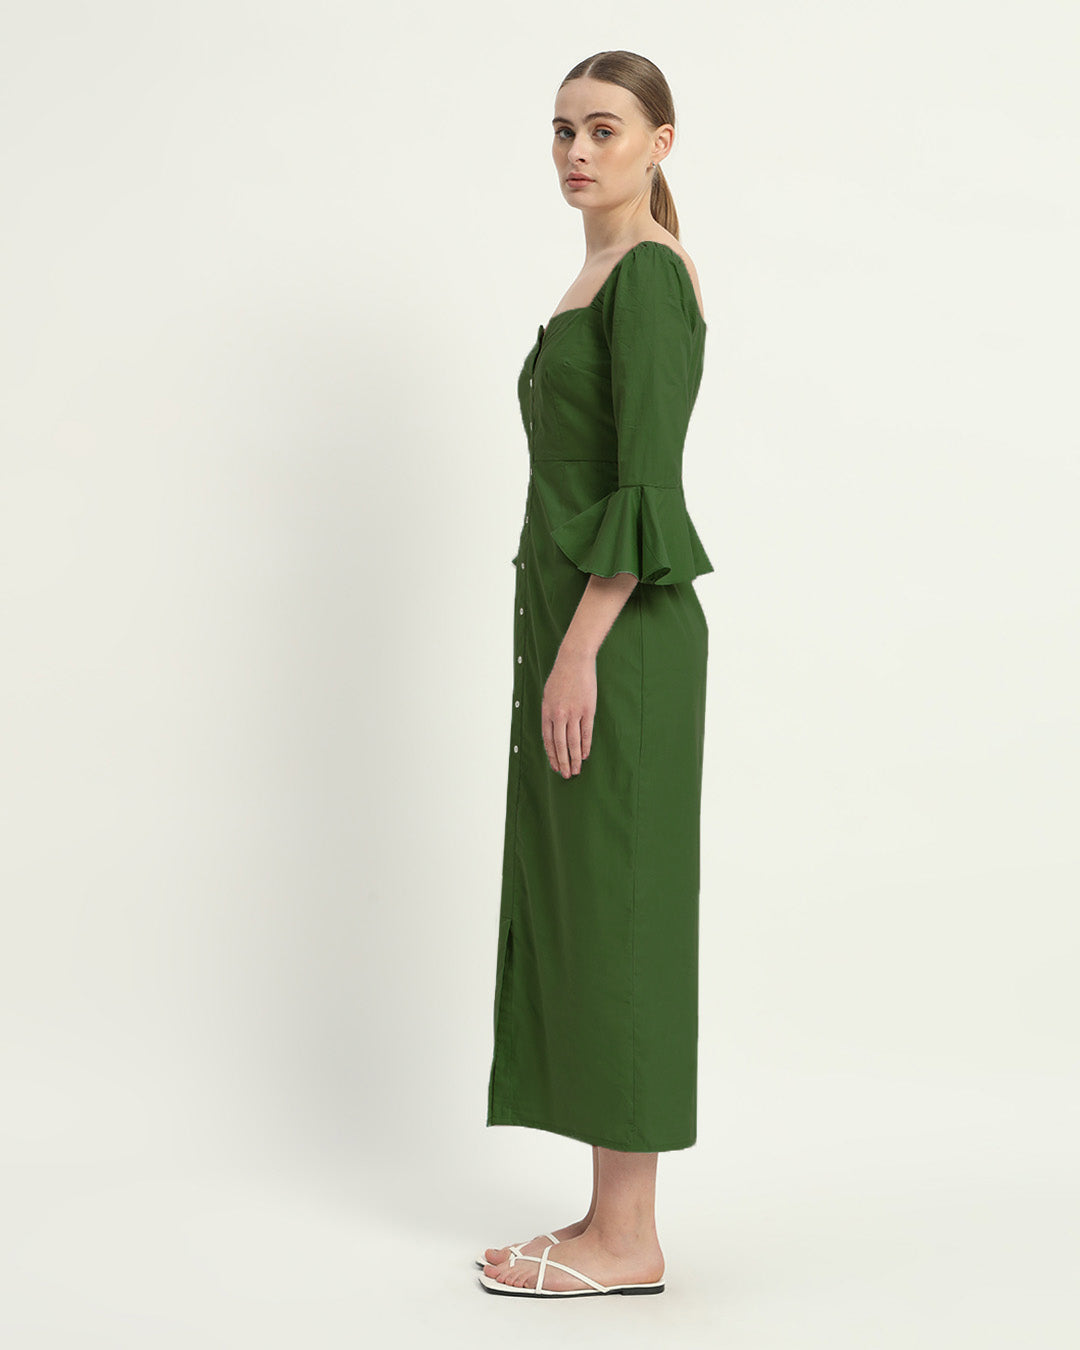 The Emerald Rosendale Cotton Dress